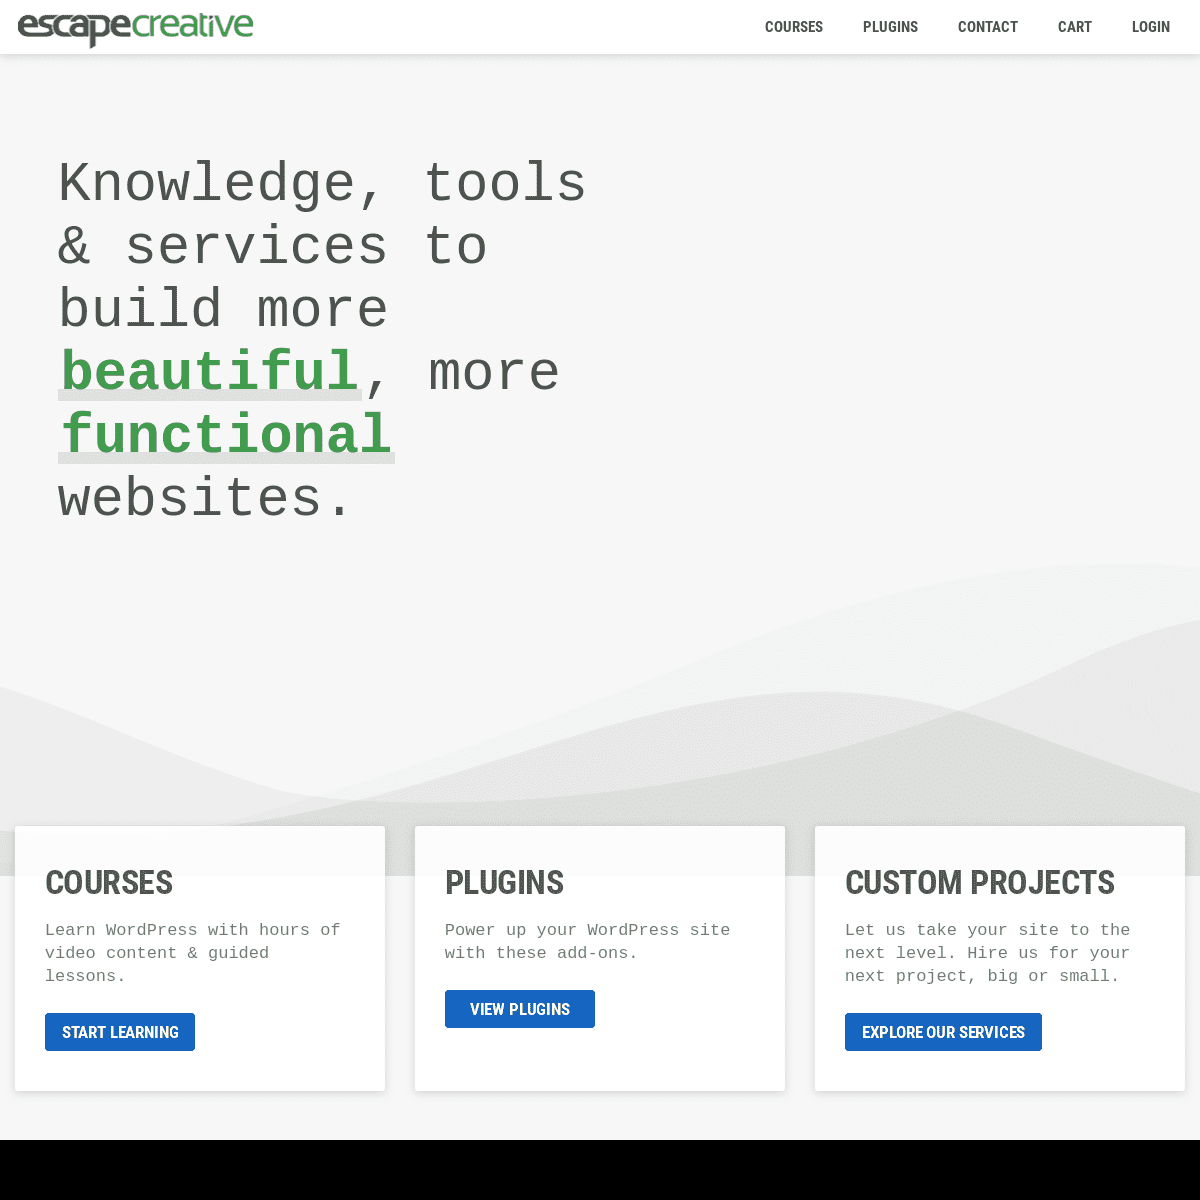 Escape Creative - WordPress Courses, Plugins & Custom Development